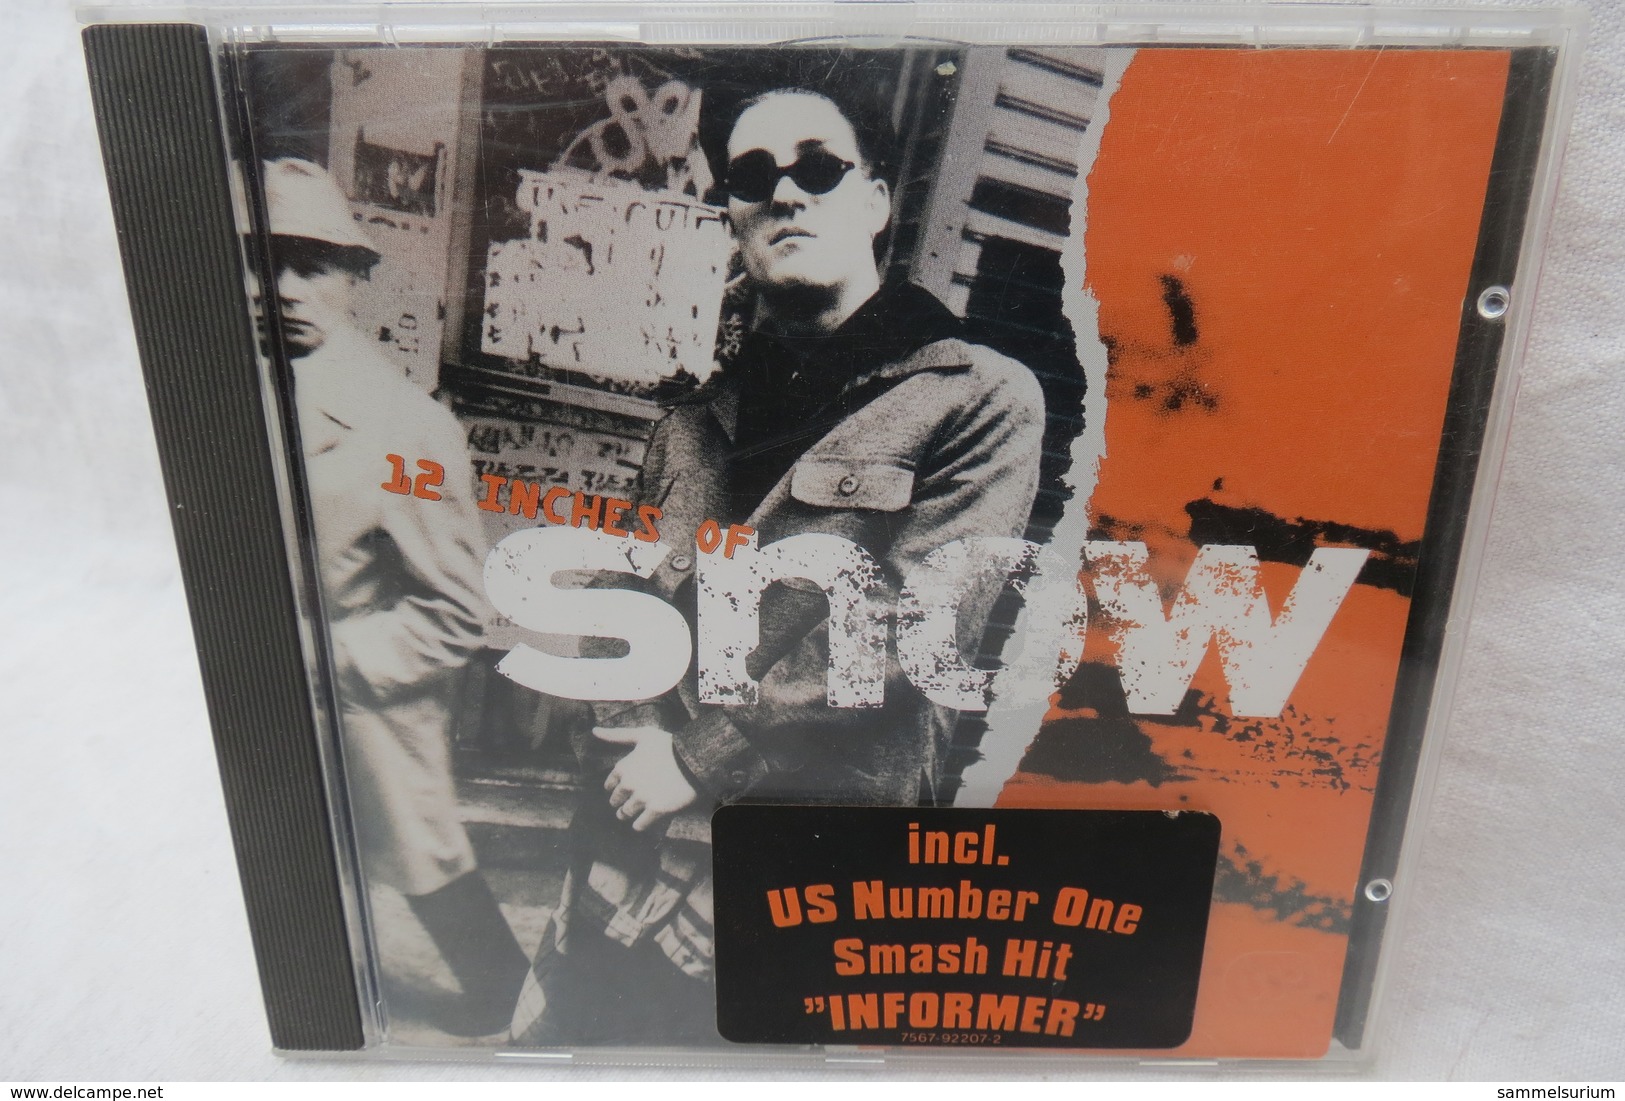 CD "Snow" 12 Inches Of Snow - Rap & Hip Hop